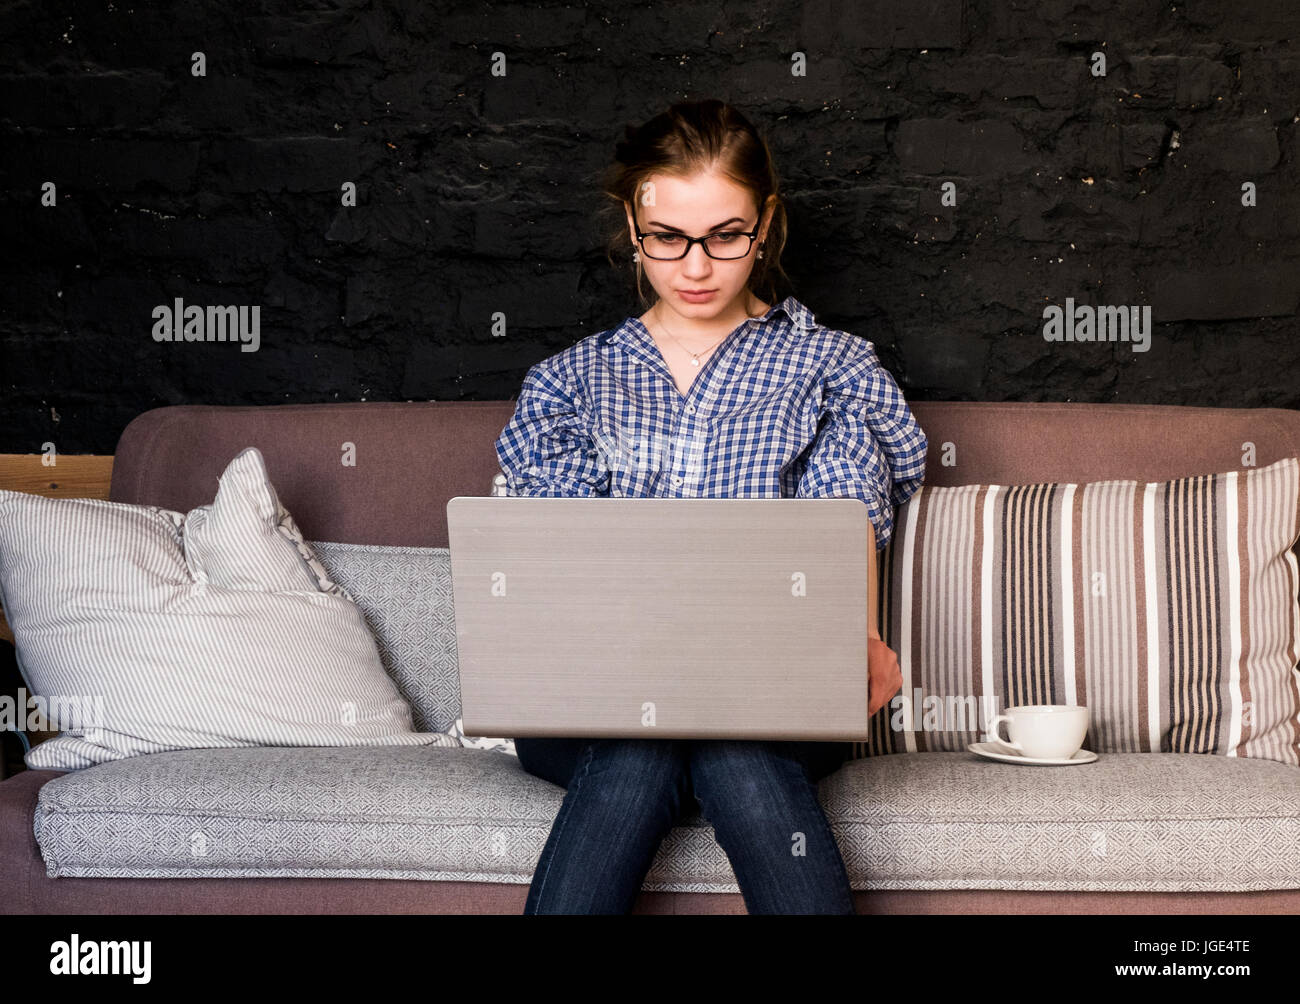 Caucasian woman sitting on sofa using laptop Stock Photo